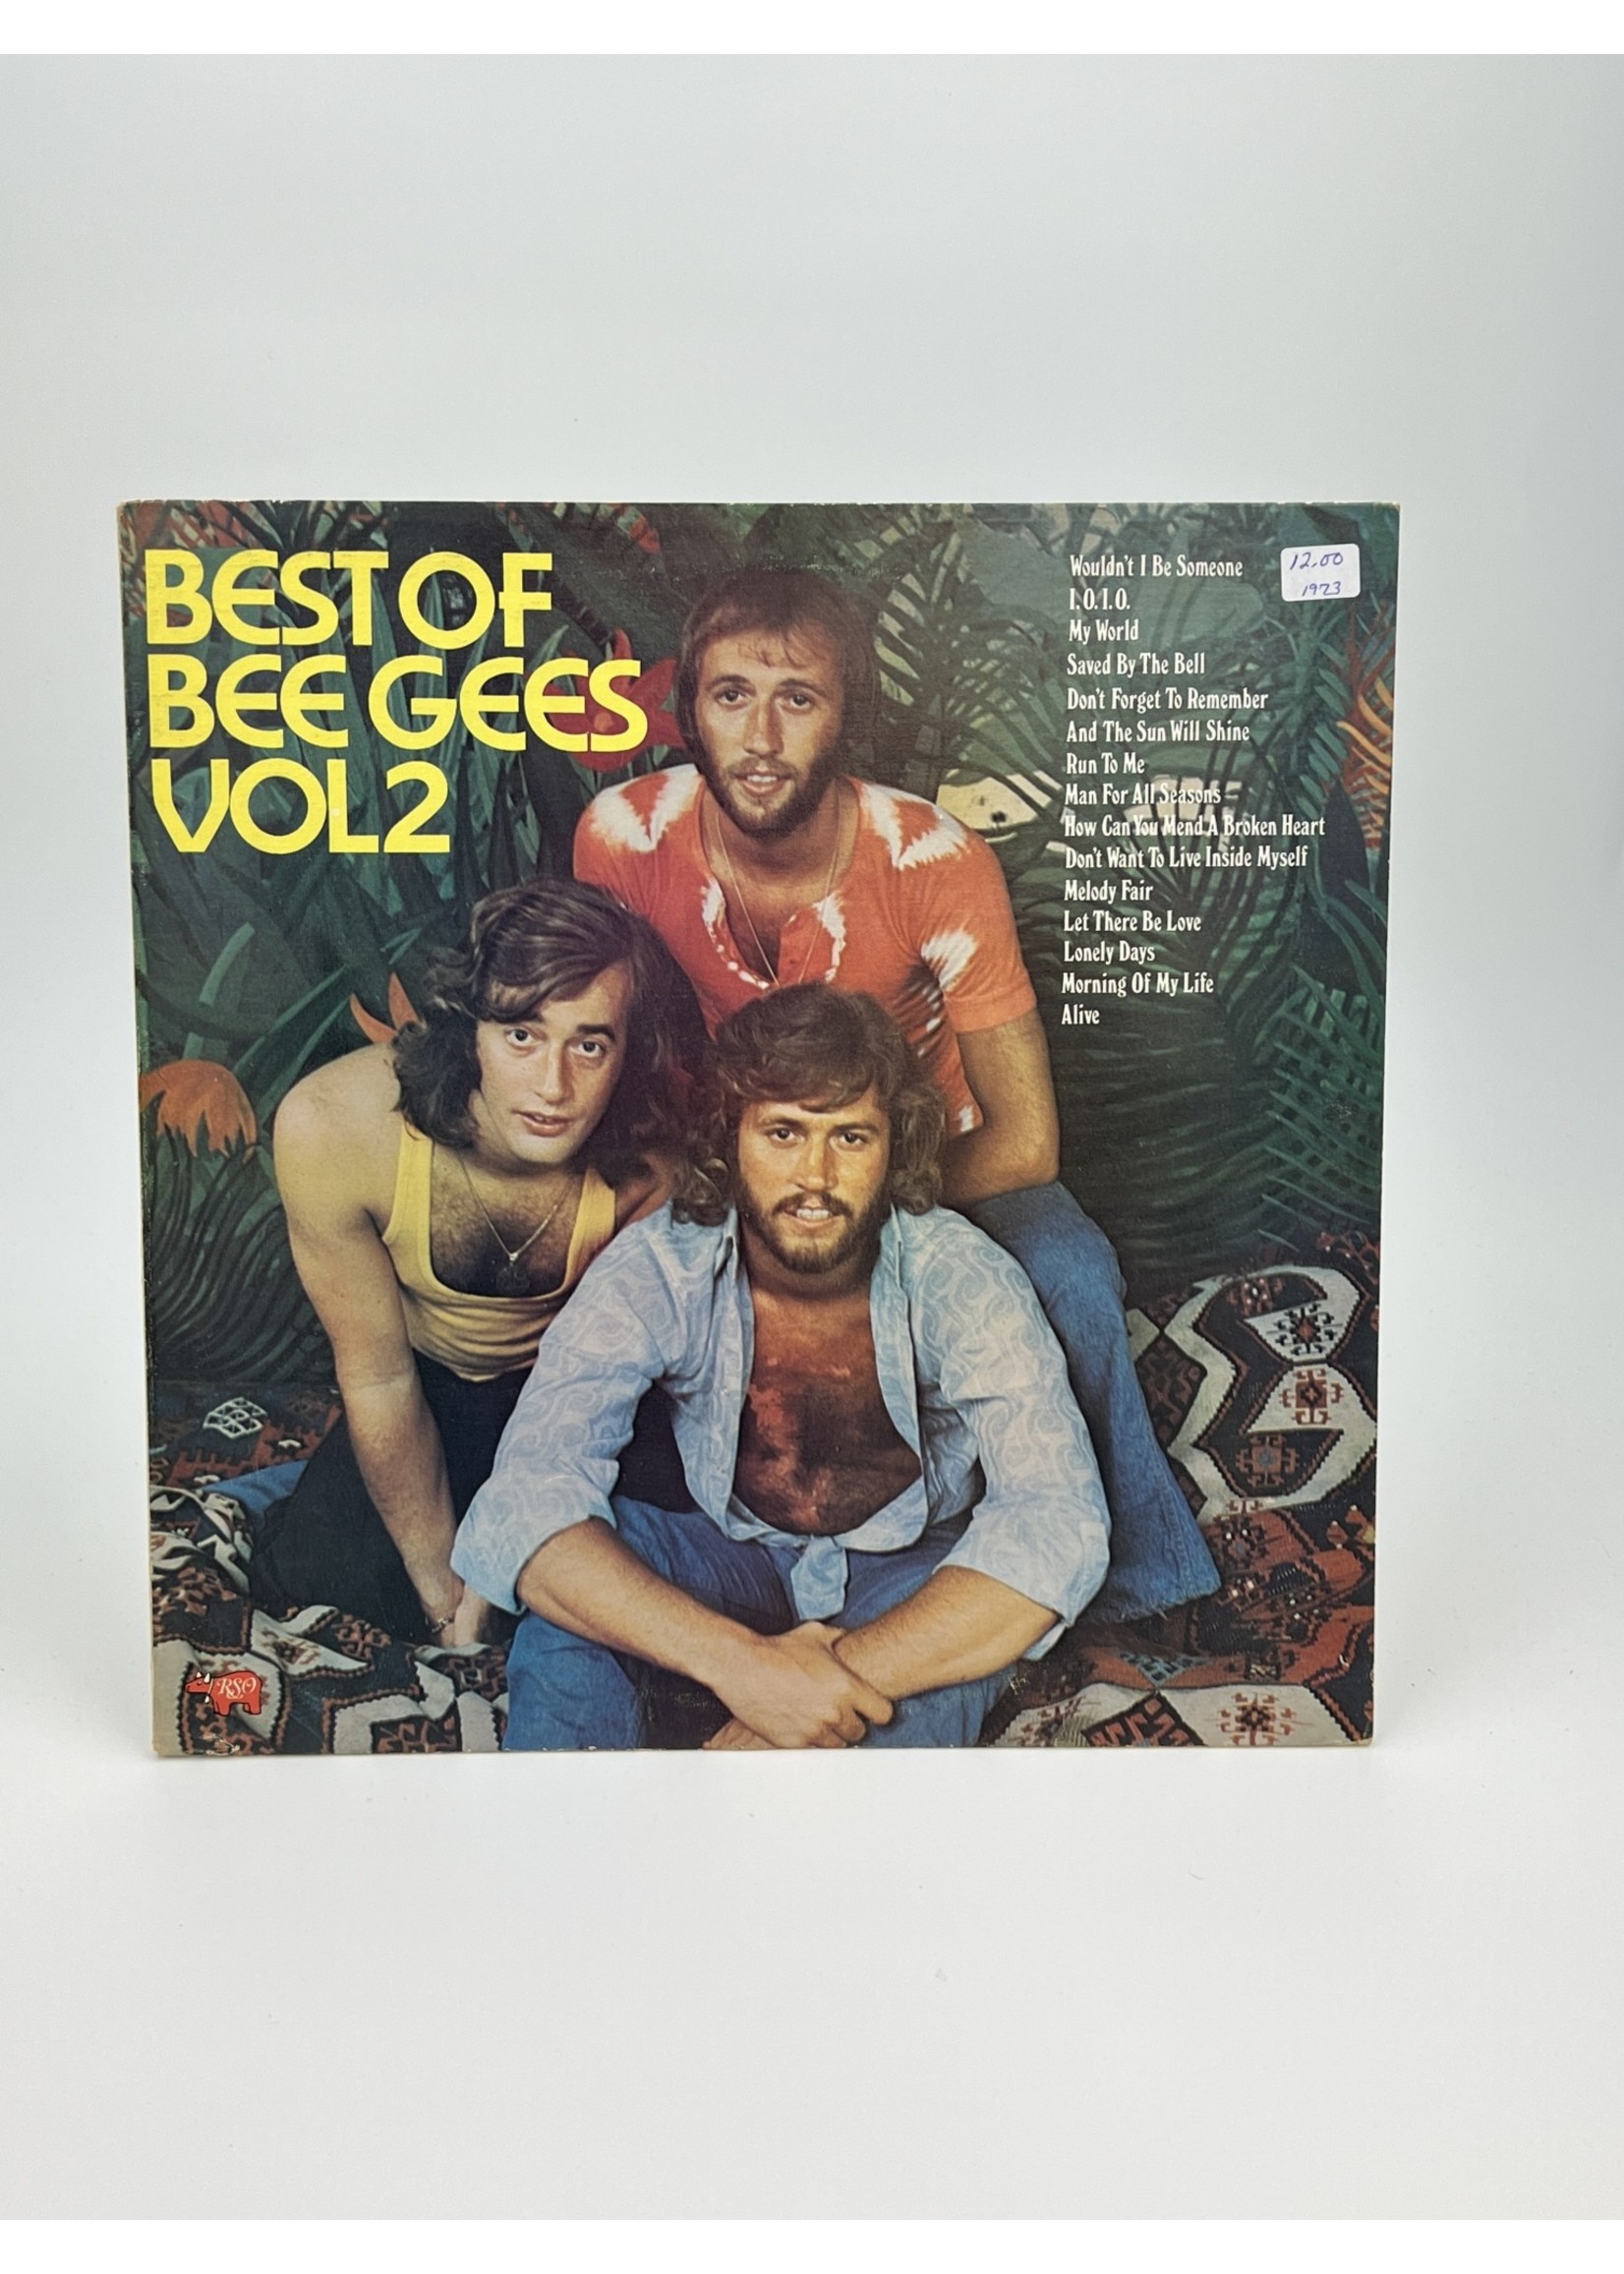 LP Best of Bee Gees Volume 2 LP Record